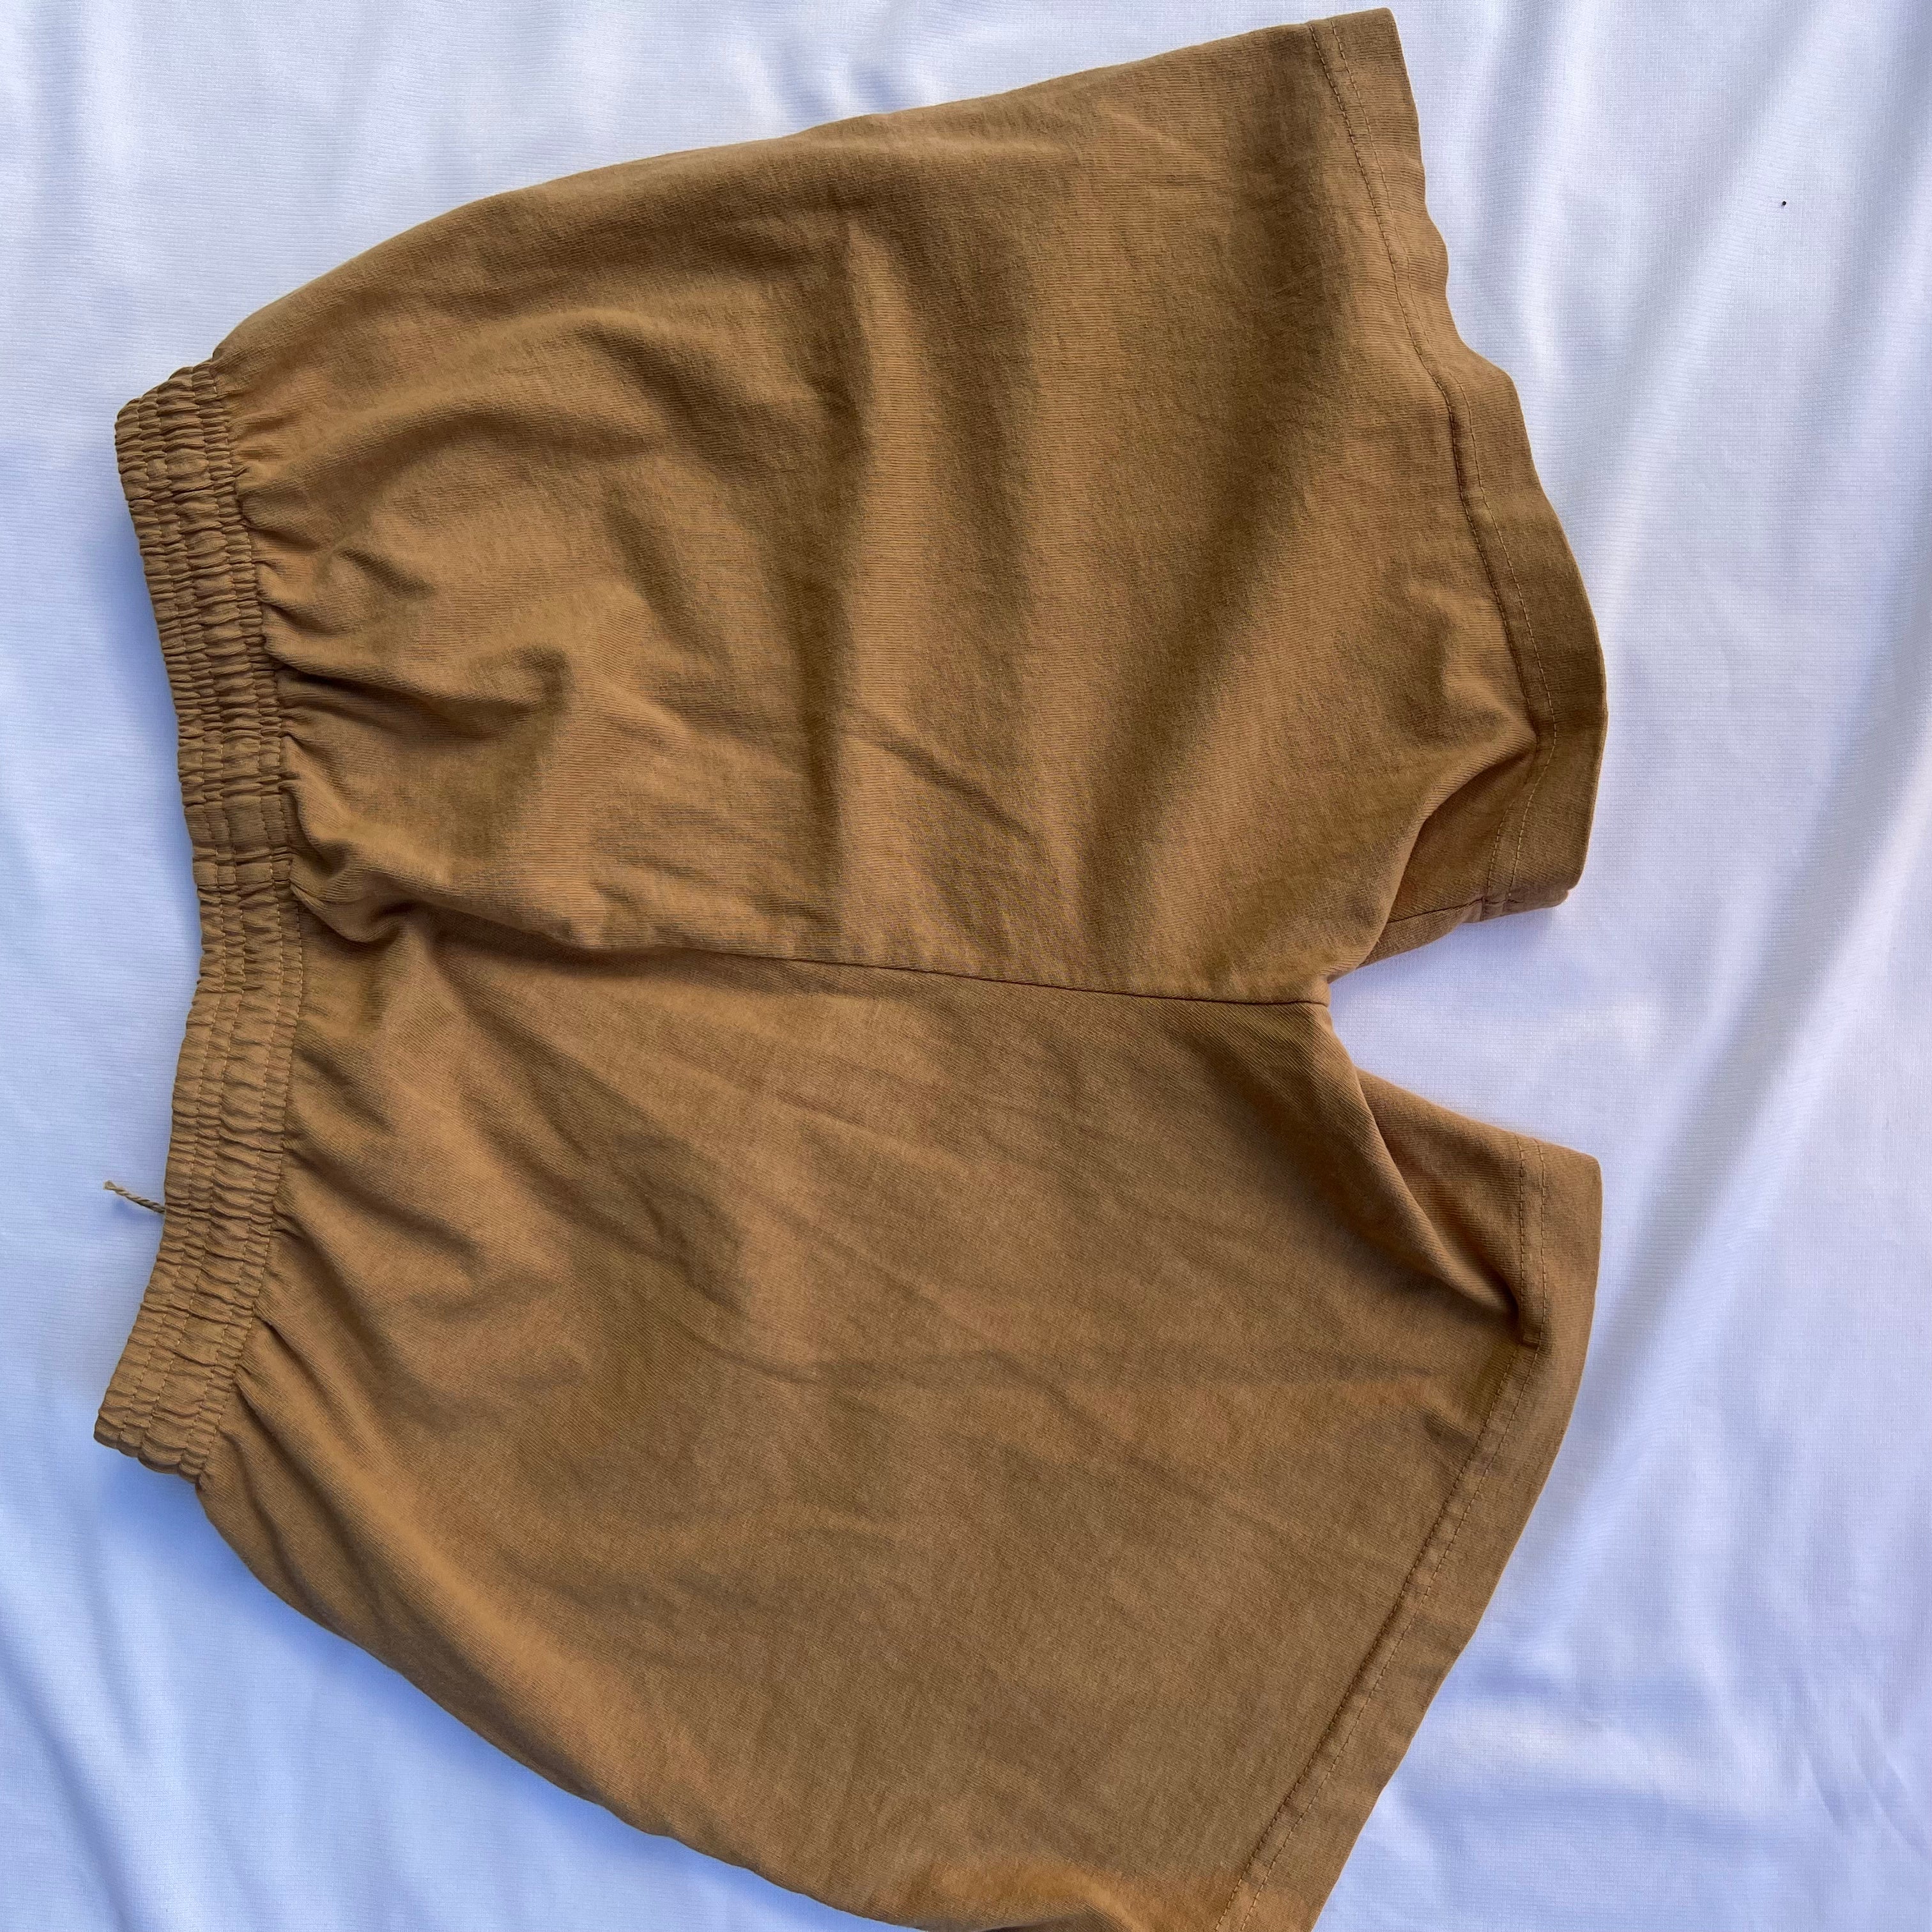 Unisex Heart Fleece Shorts